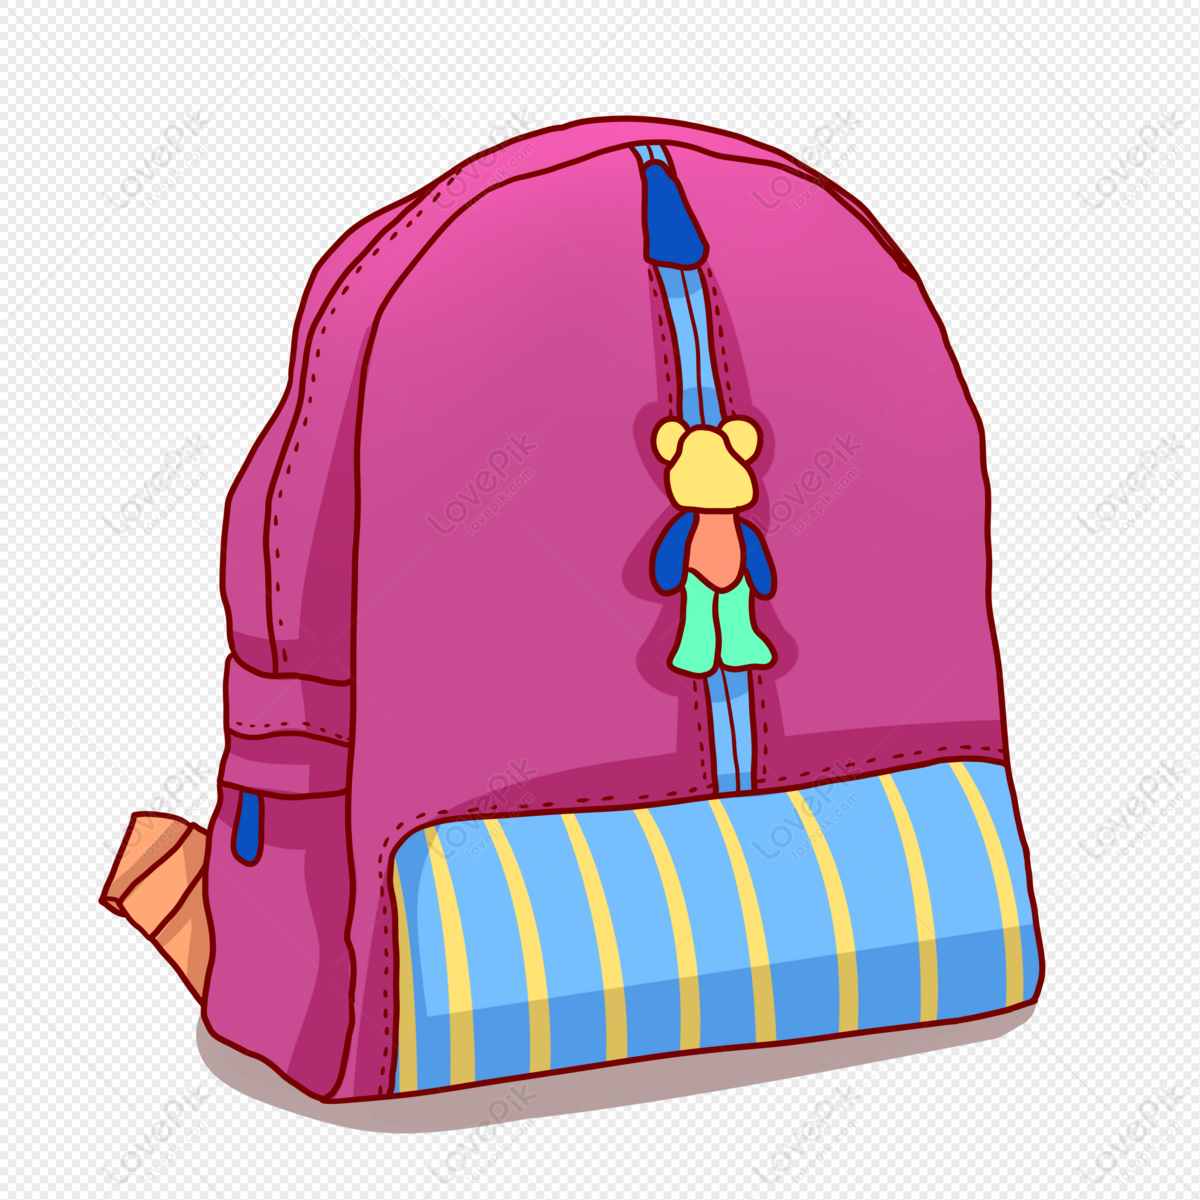 School bag clipart. Free download transparent .PNG